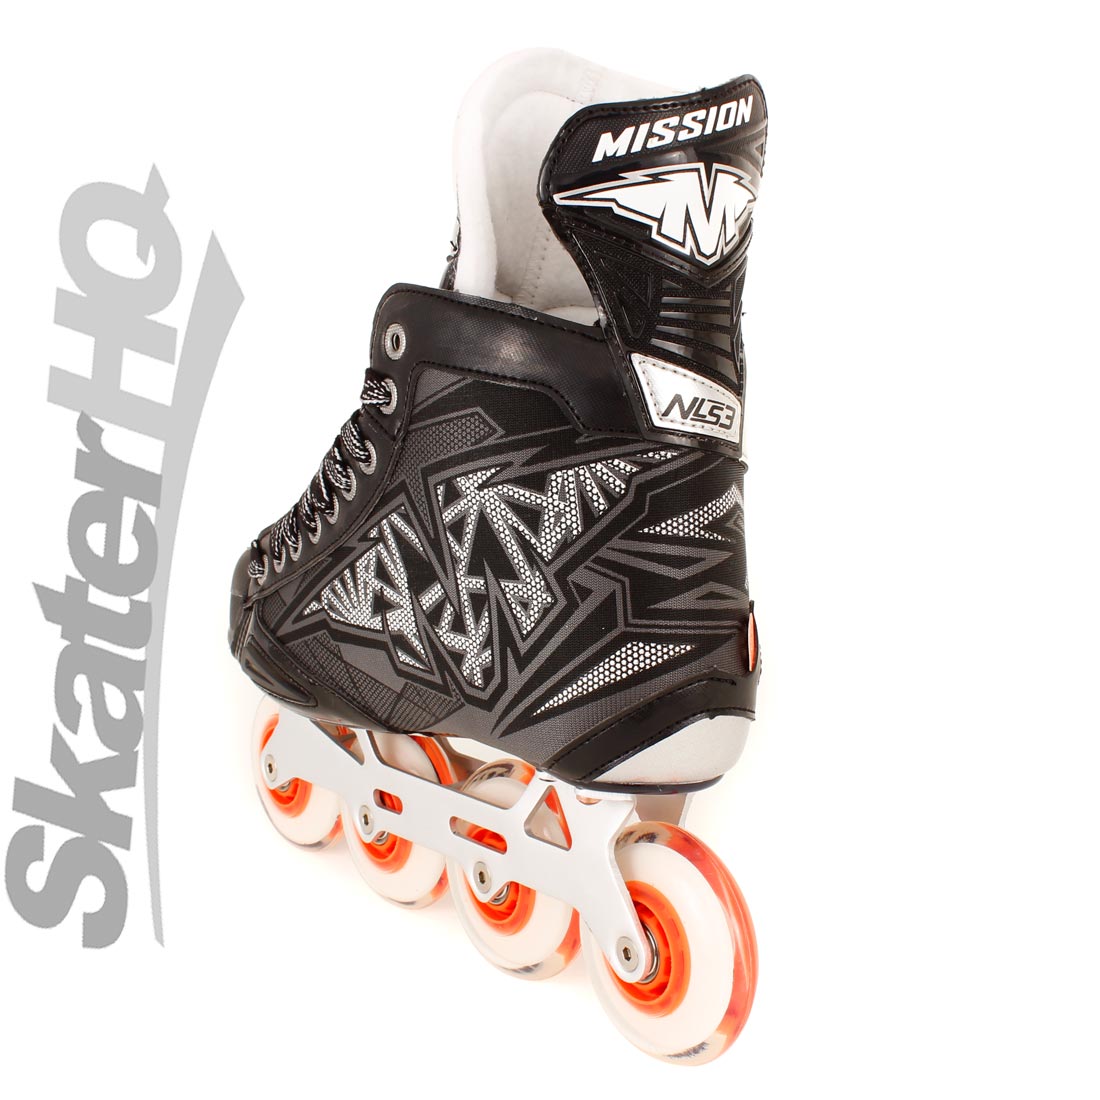 Mission Inhaler NLS3 Skate - 11US Inline Hockey Skates